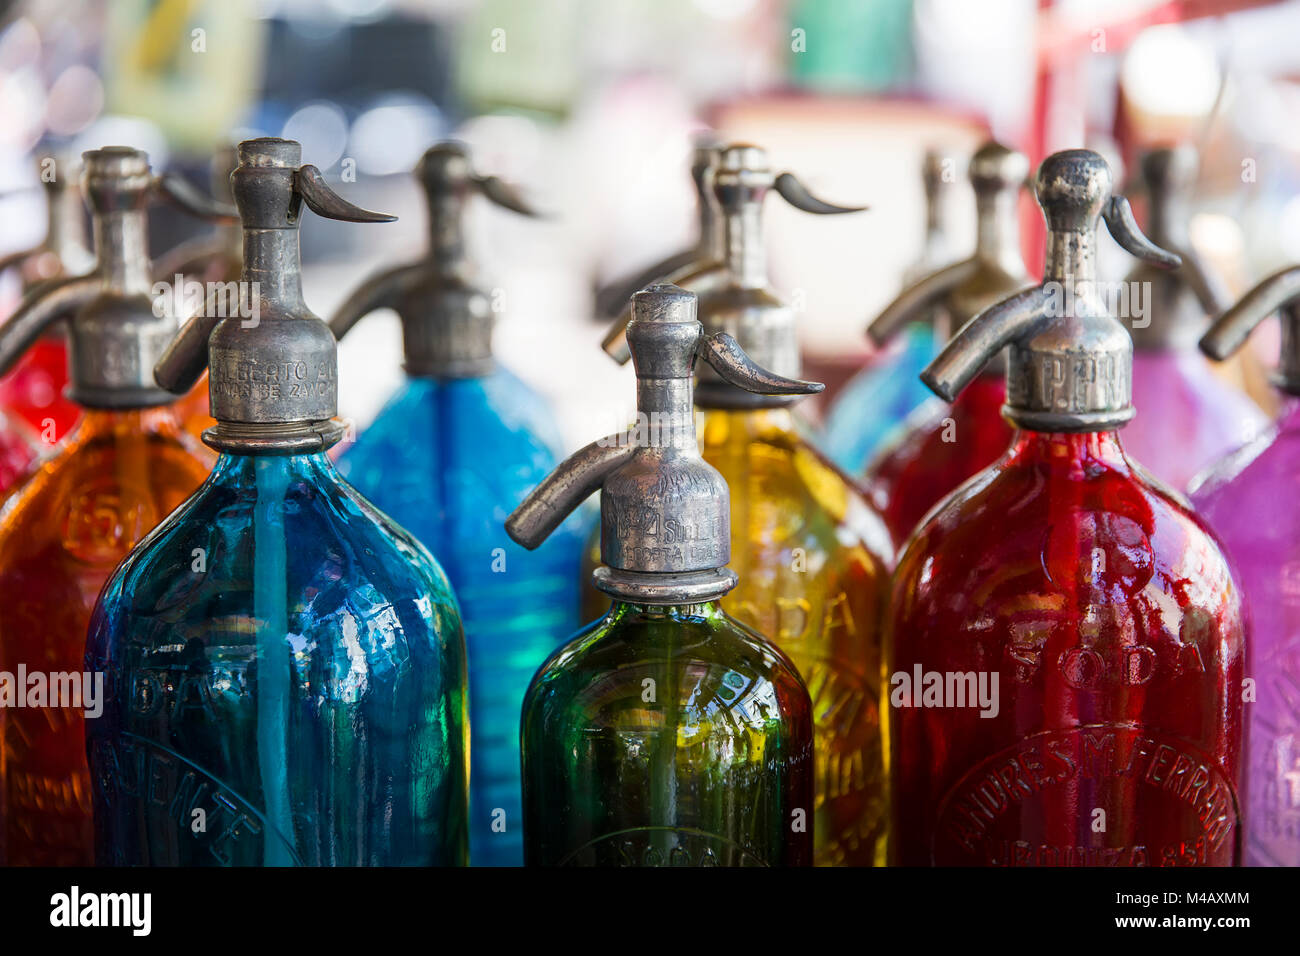 Soda bottles at San Telmo flea market in Buenos Aires, Argentina. Stock Photo